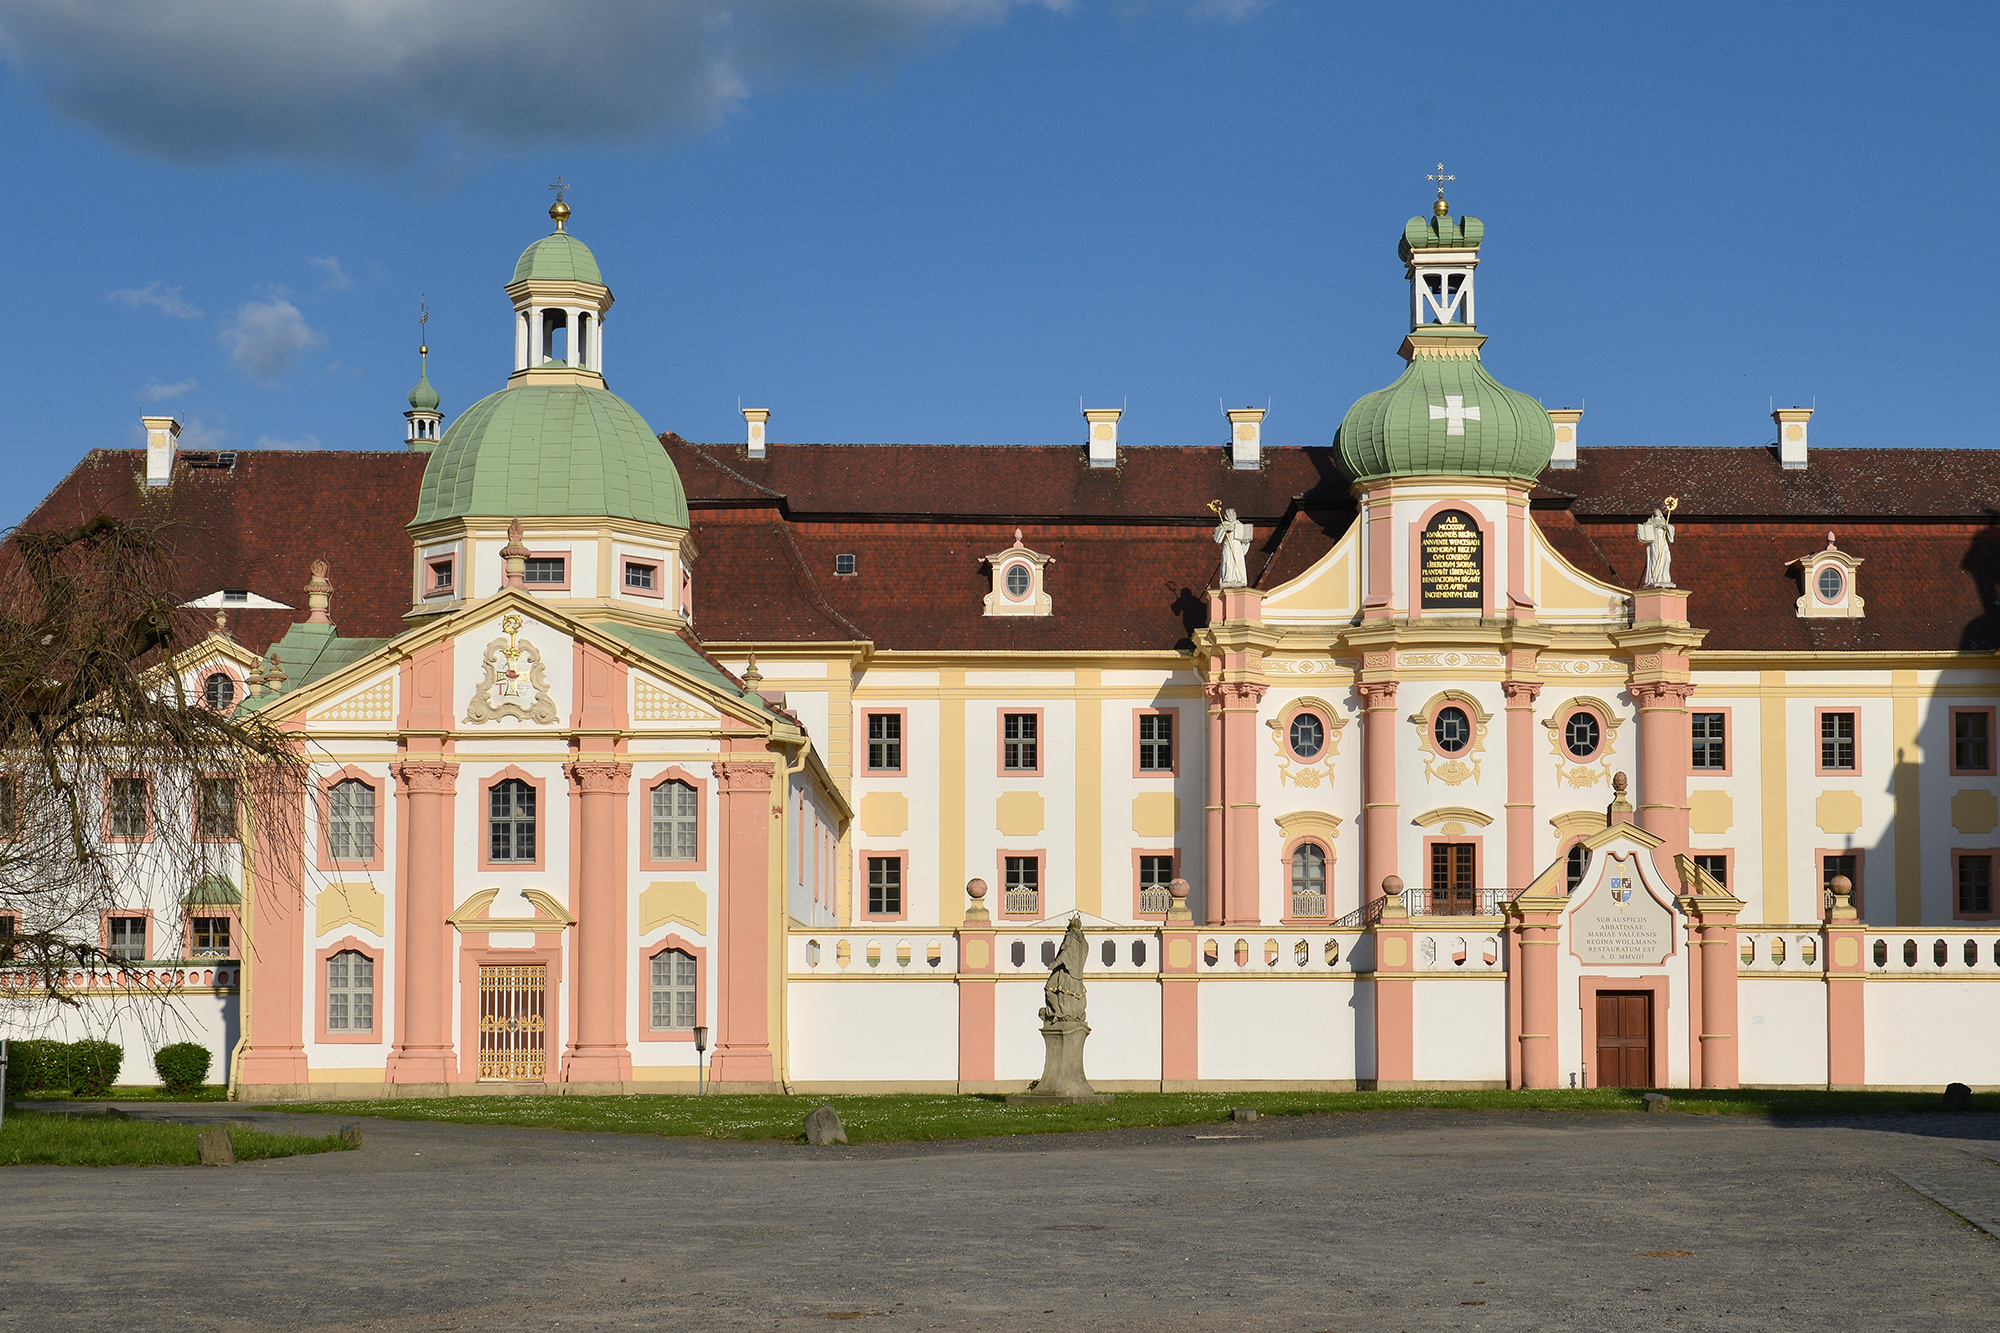 Kloster St Marienthal